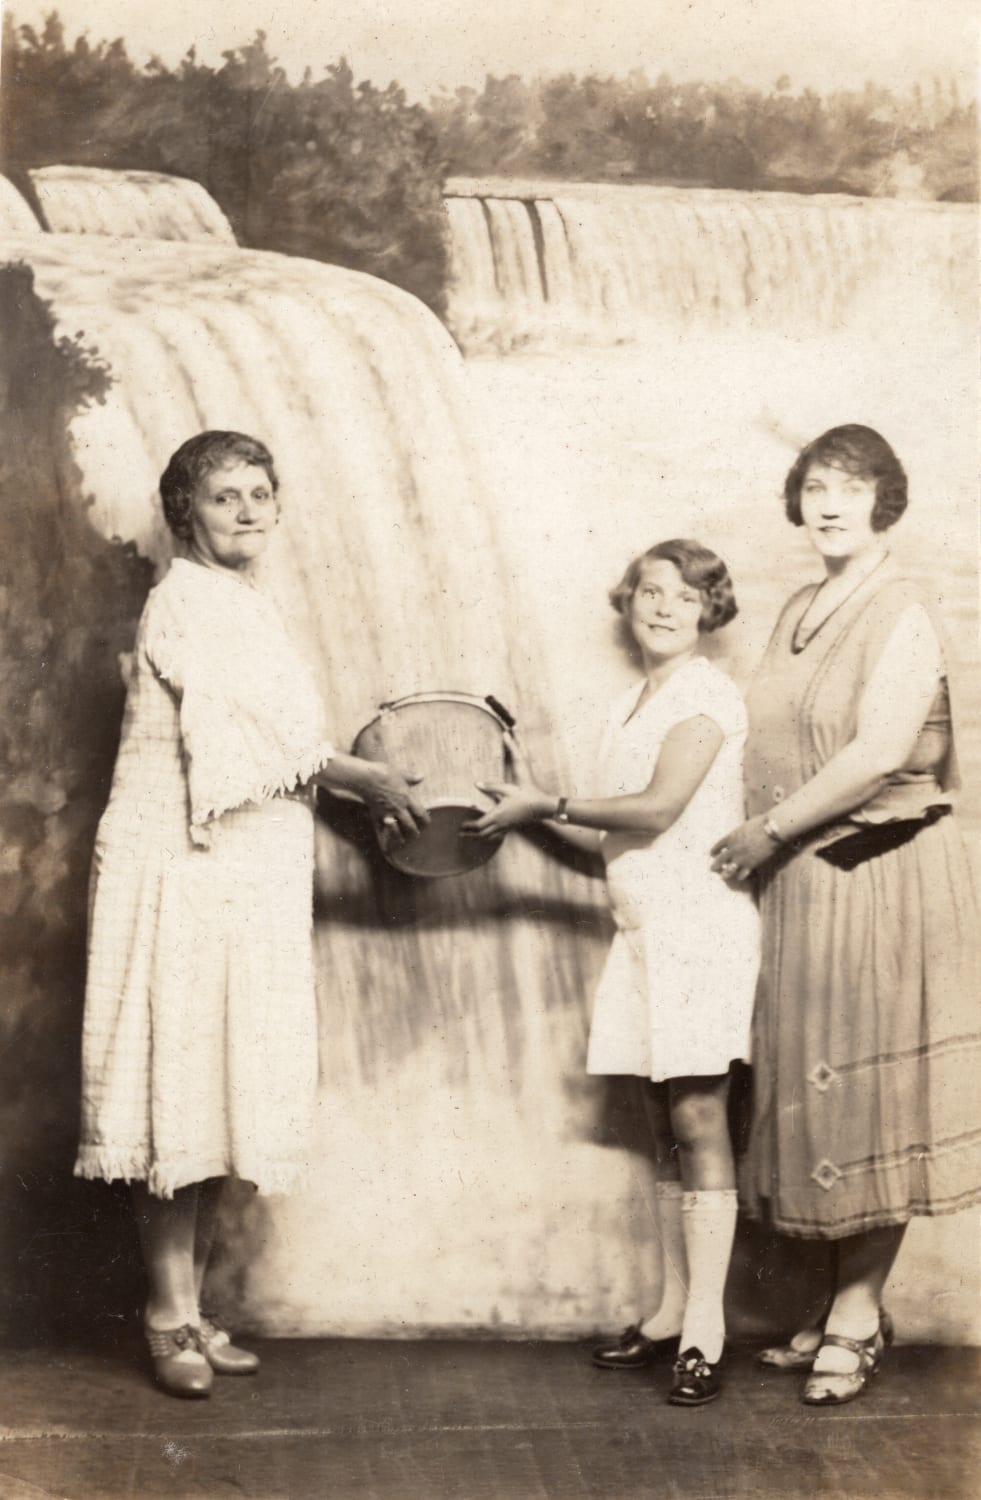 My Grandma, Great Grandma, and Grand Aunt at Niagara Falls 1922